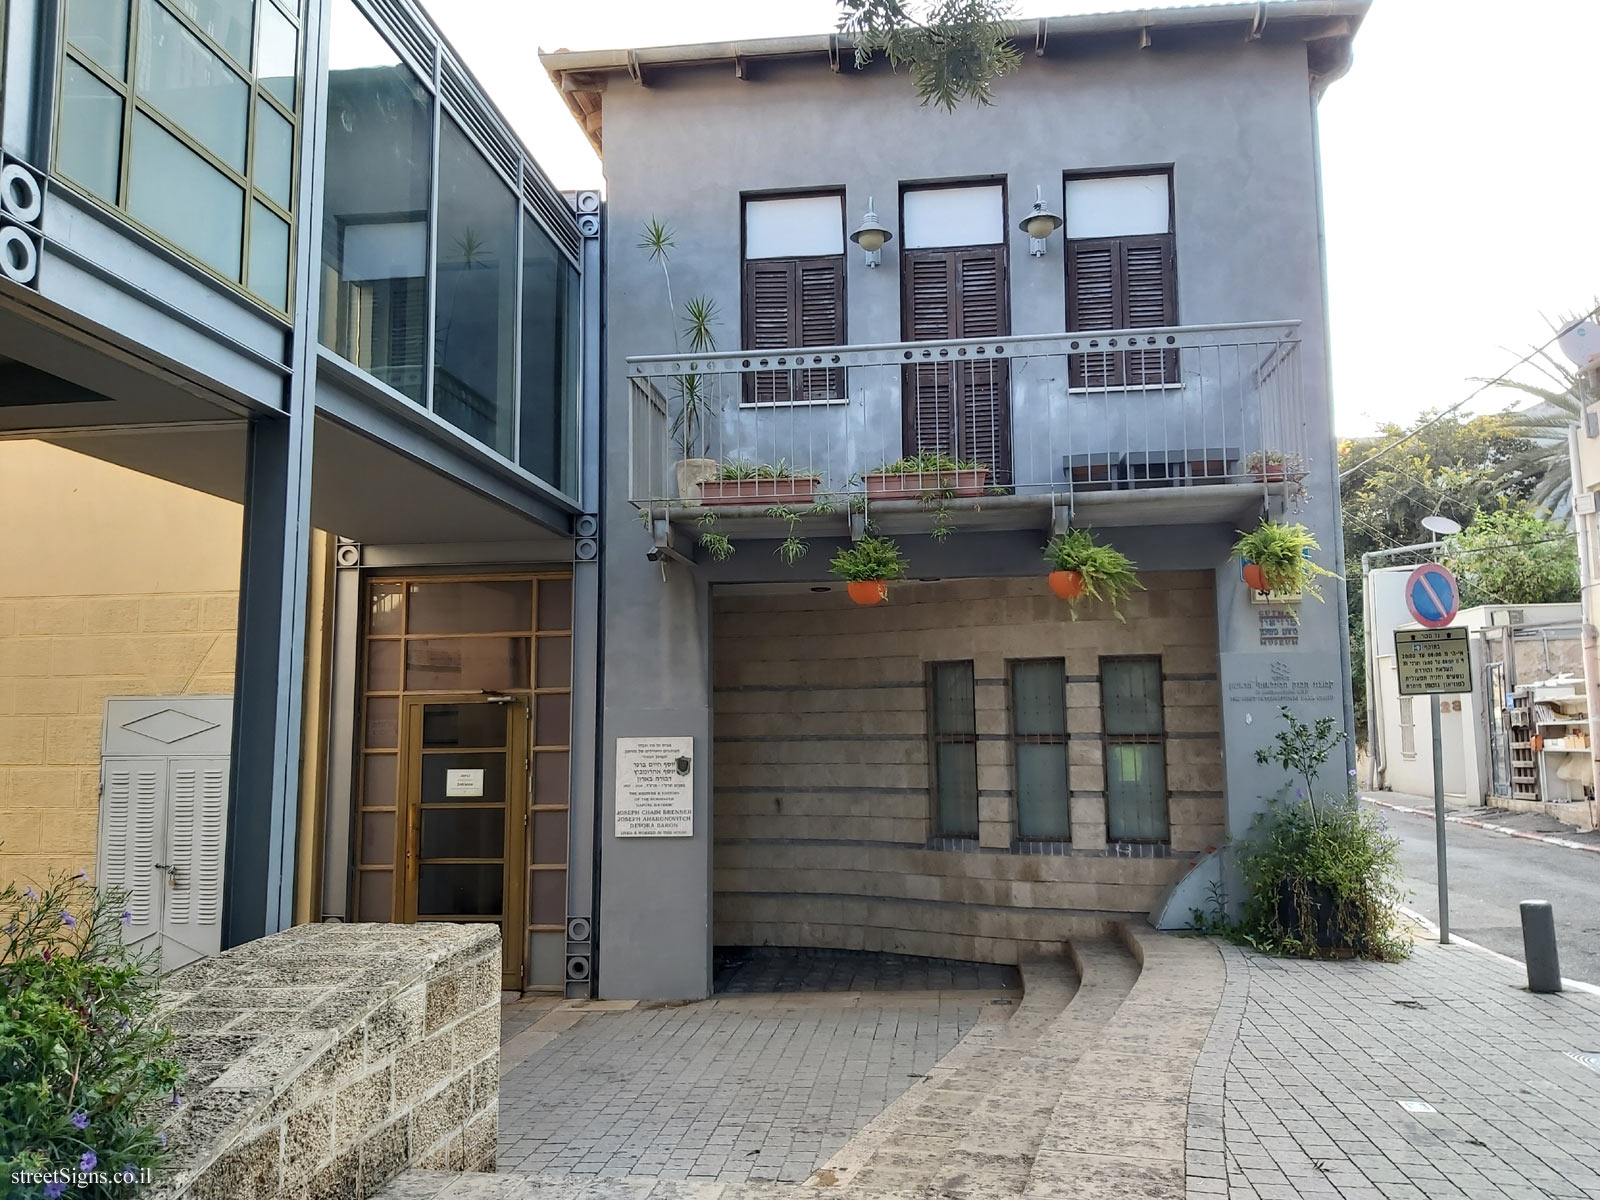 The workplace of Brener, Aharonovitch and Baron - Neve Tzedek St 39, Tel Aviv-Yafo, Israel